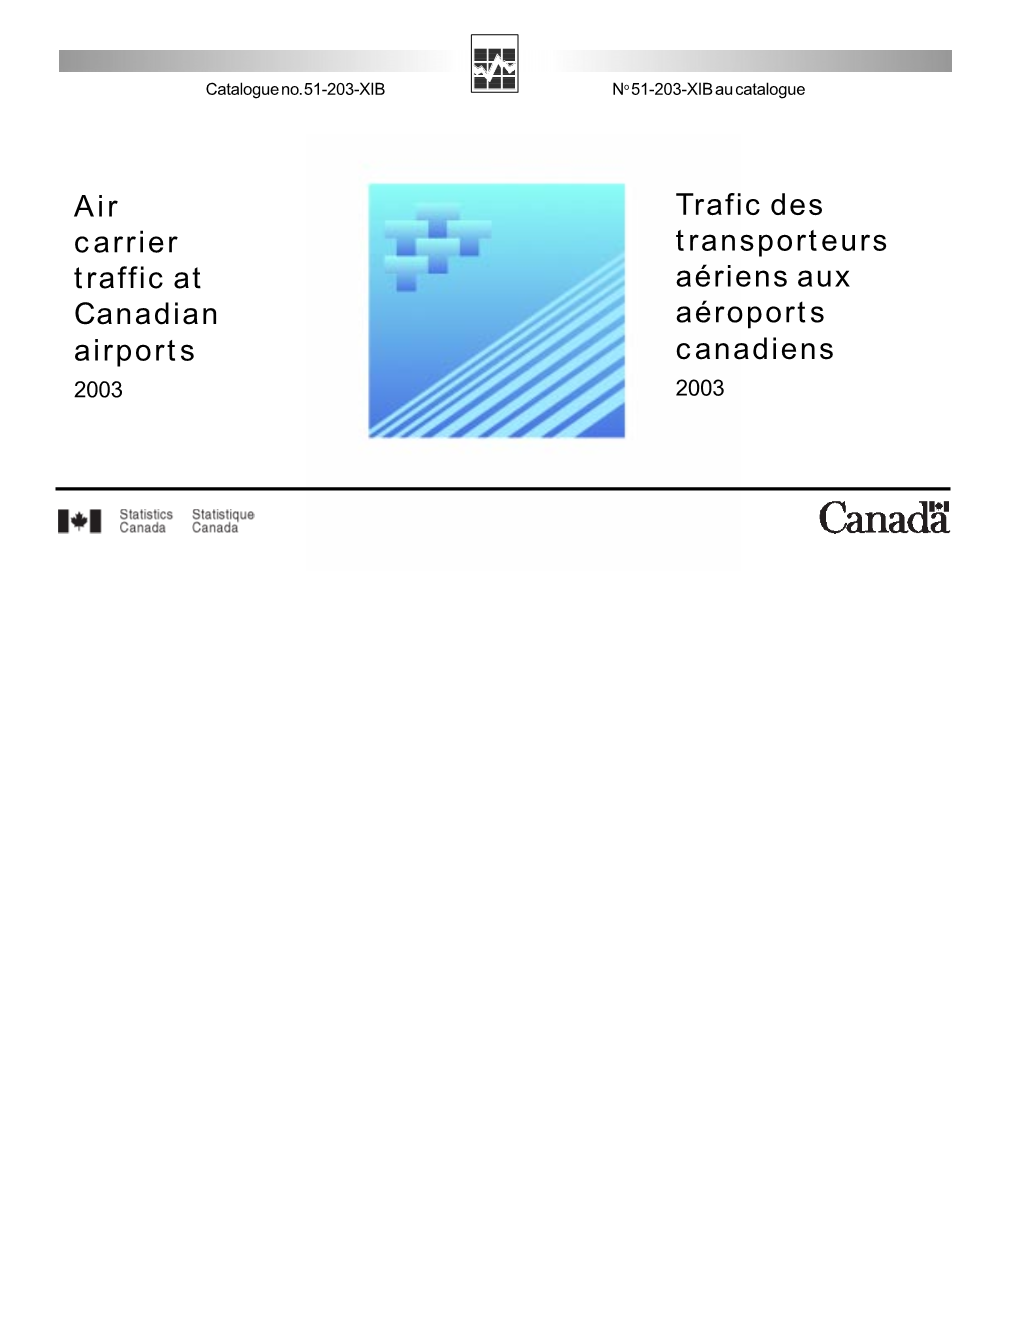 Air Carrier Traffic at Canadian Airports Trafic Des Transporteurs Aériens Aux Aéroports Canadiens